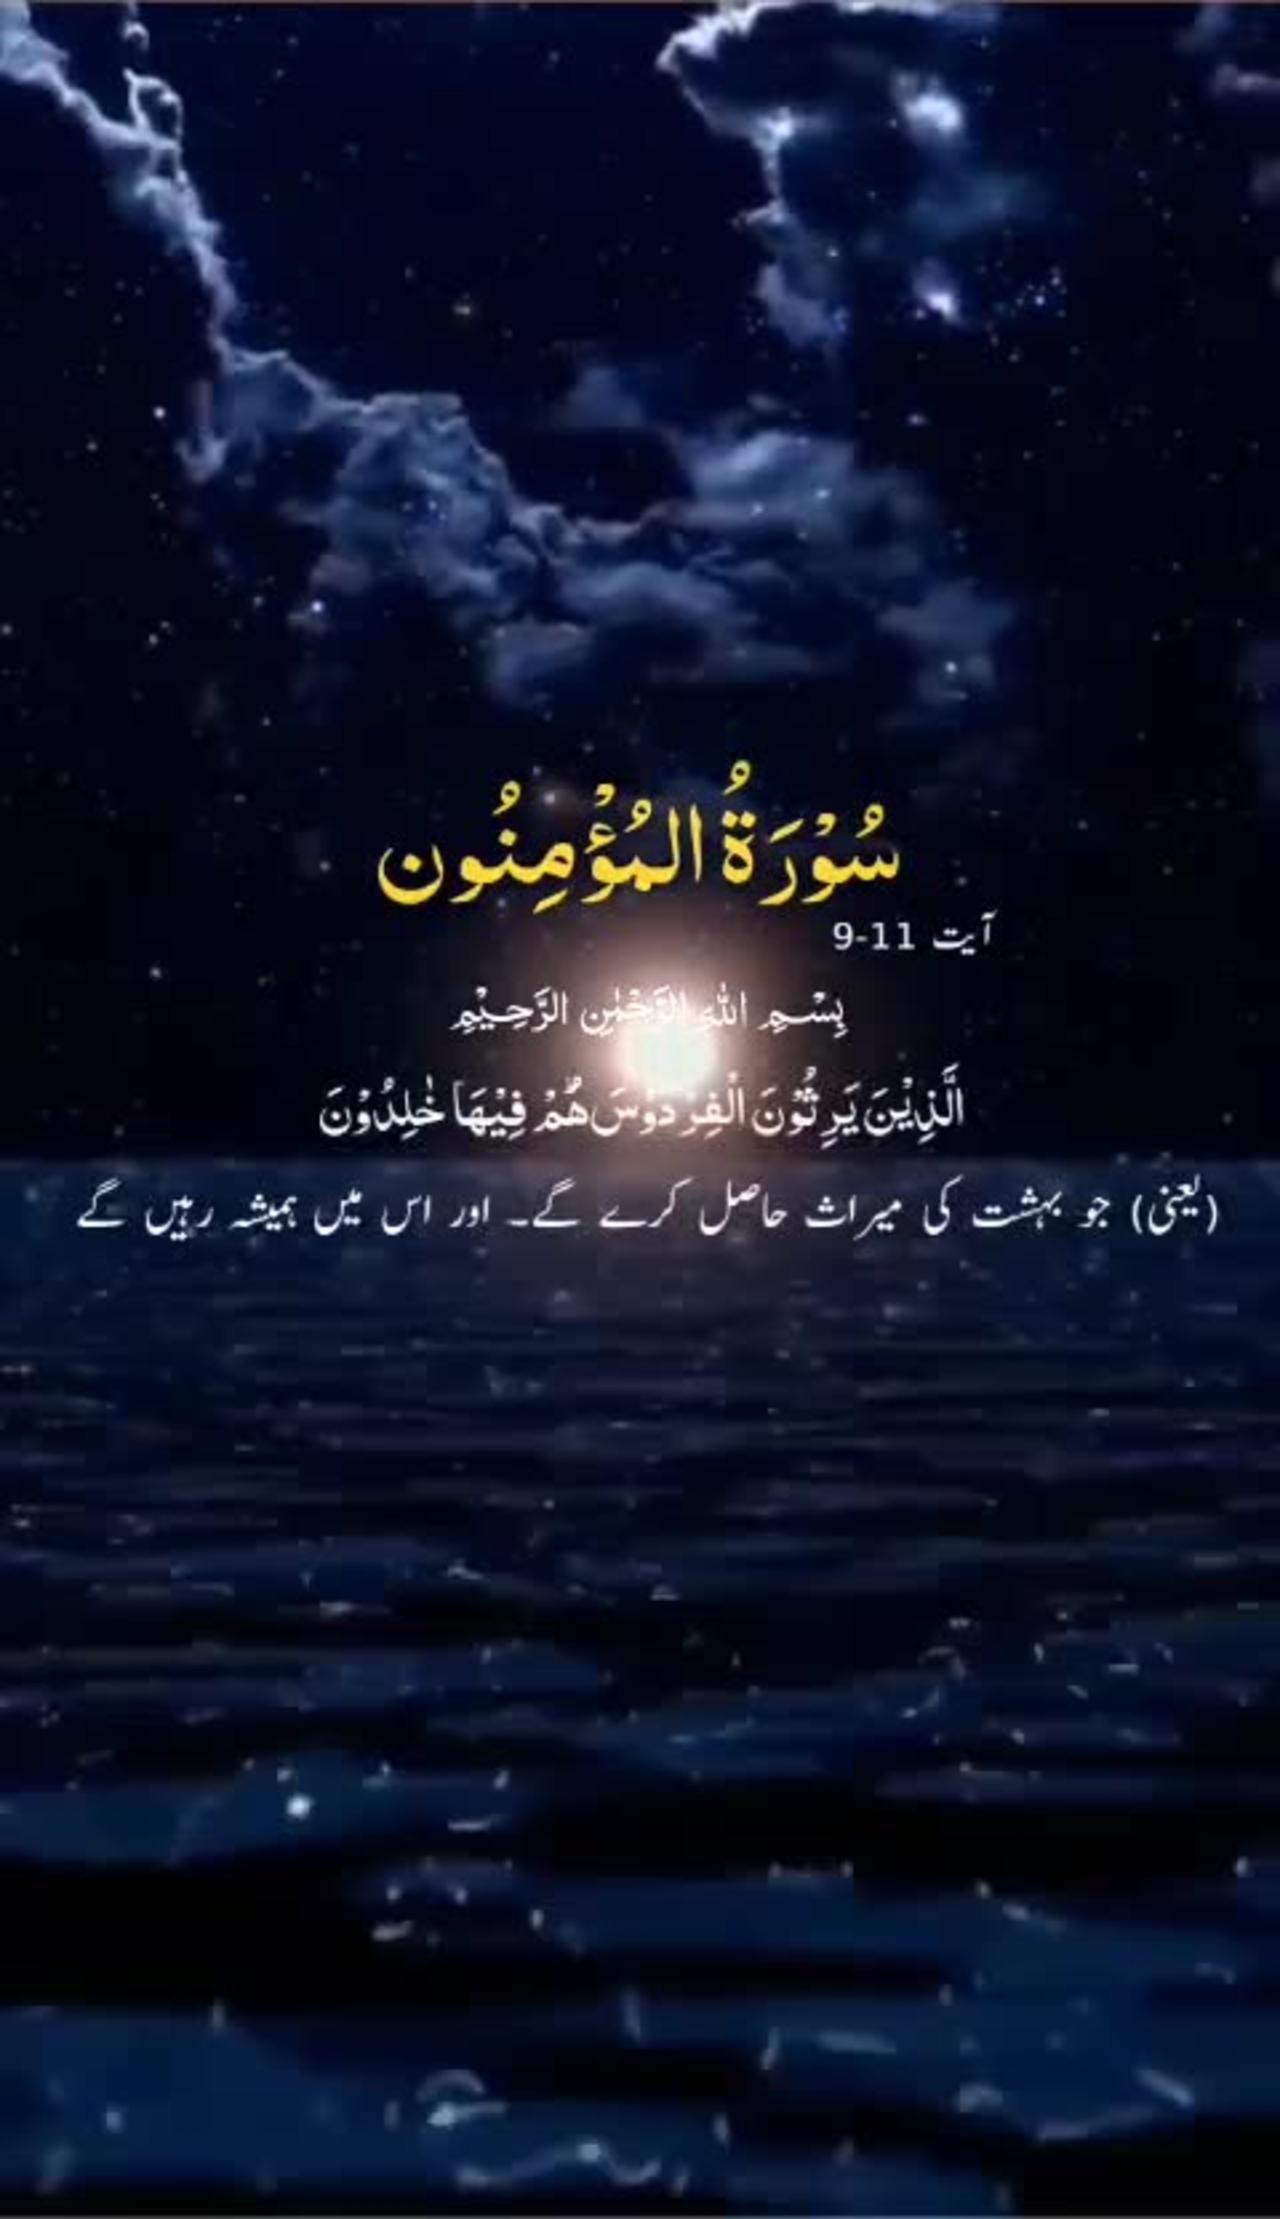 Quran urdu translation